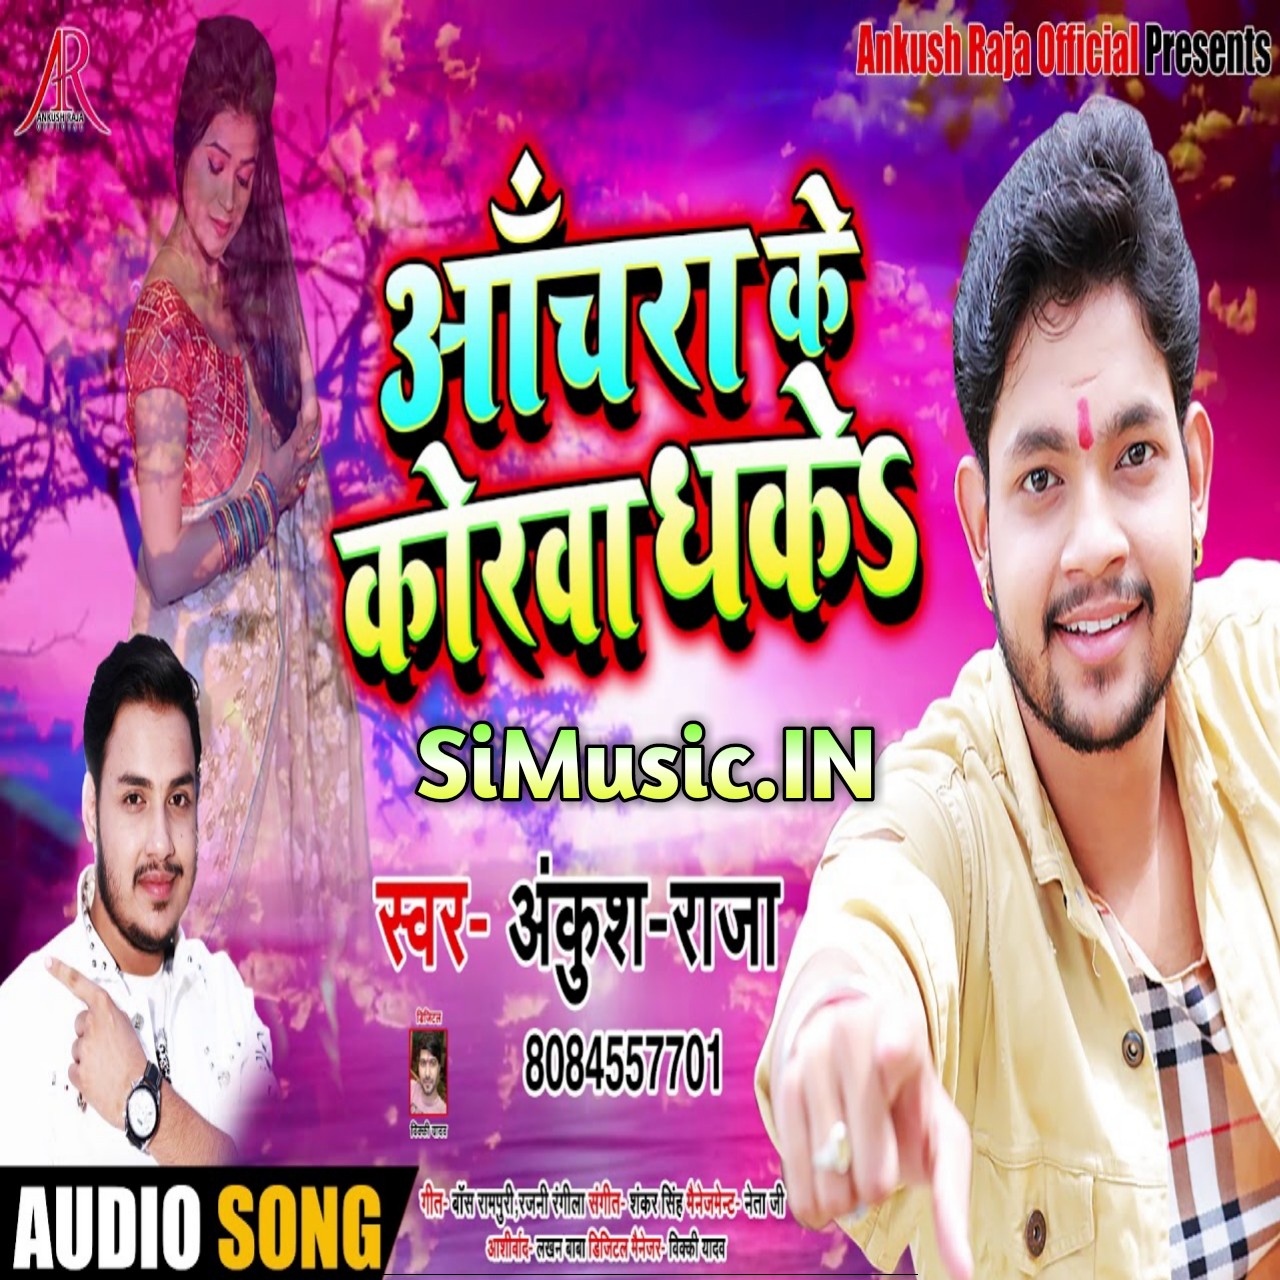 Aanchara Ke Korwa Dhake (Ankush Raja) 2019 Mp3 Songs